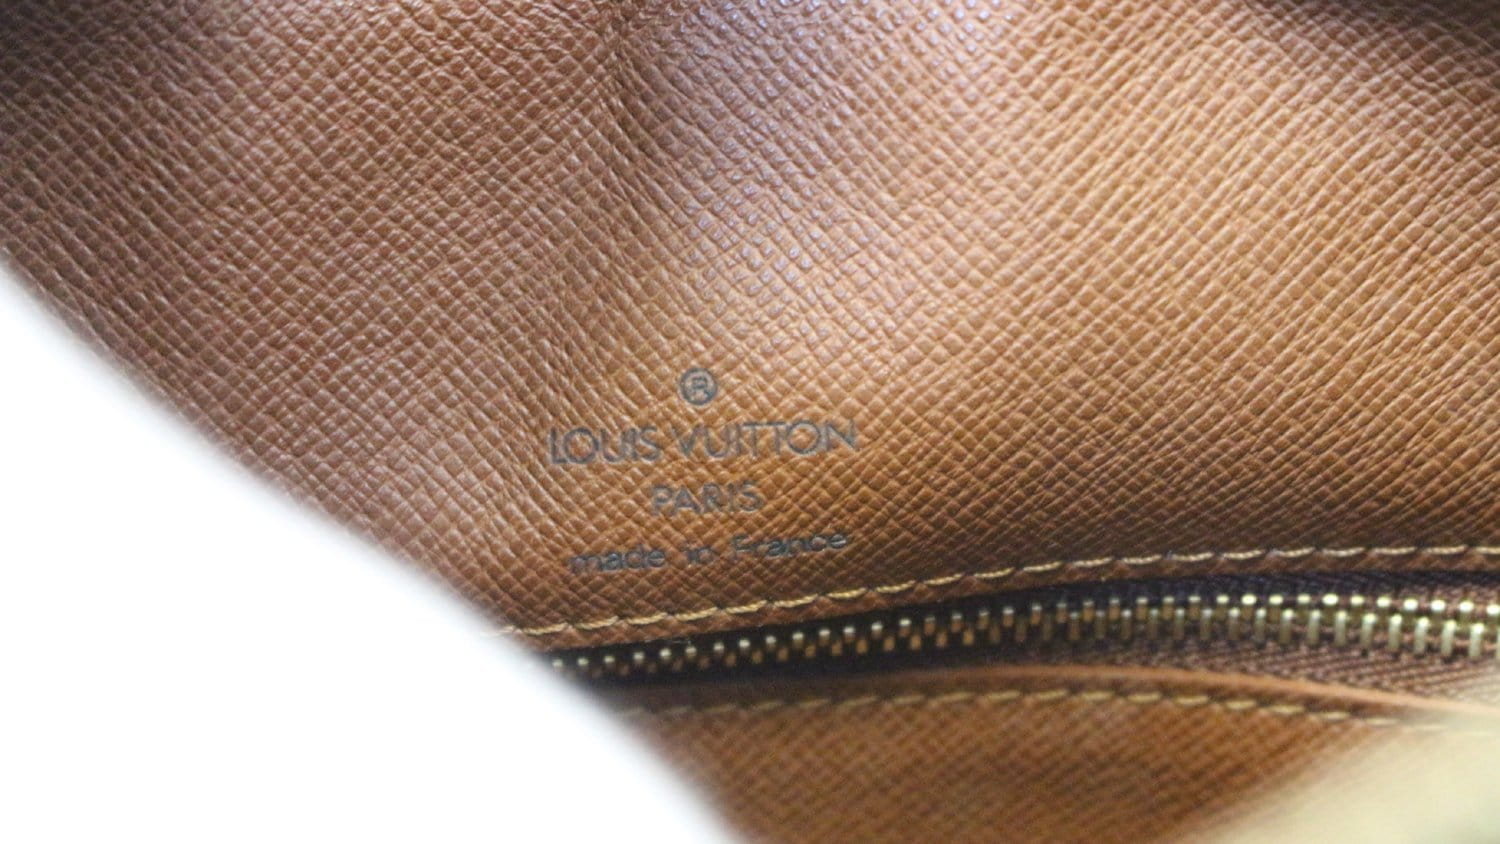 Louis Vuitton Boulogne Shoulder Bag 30 Brown Canvas 2001 - Allu USA